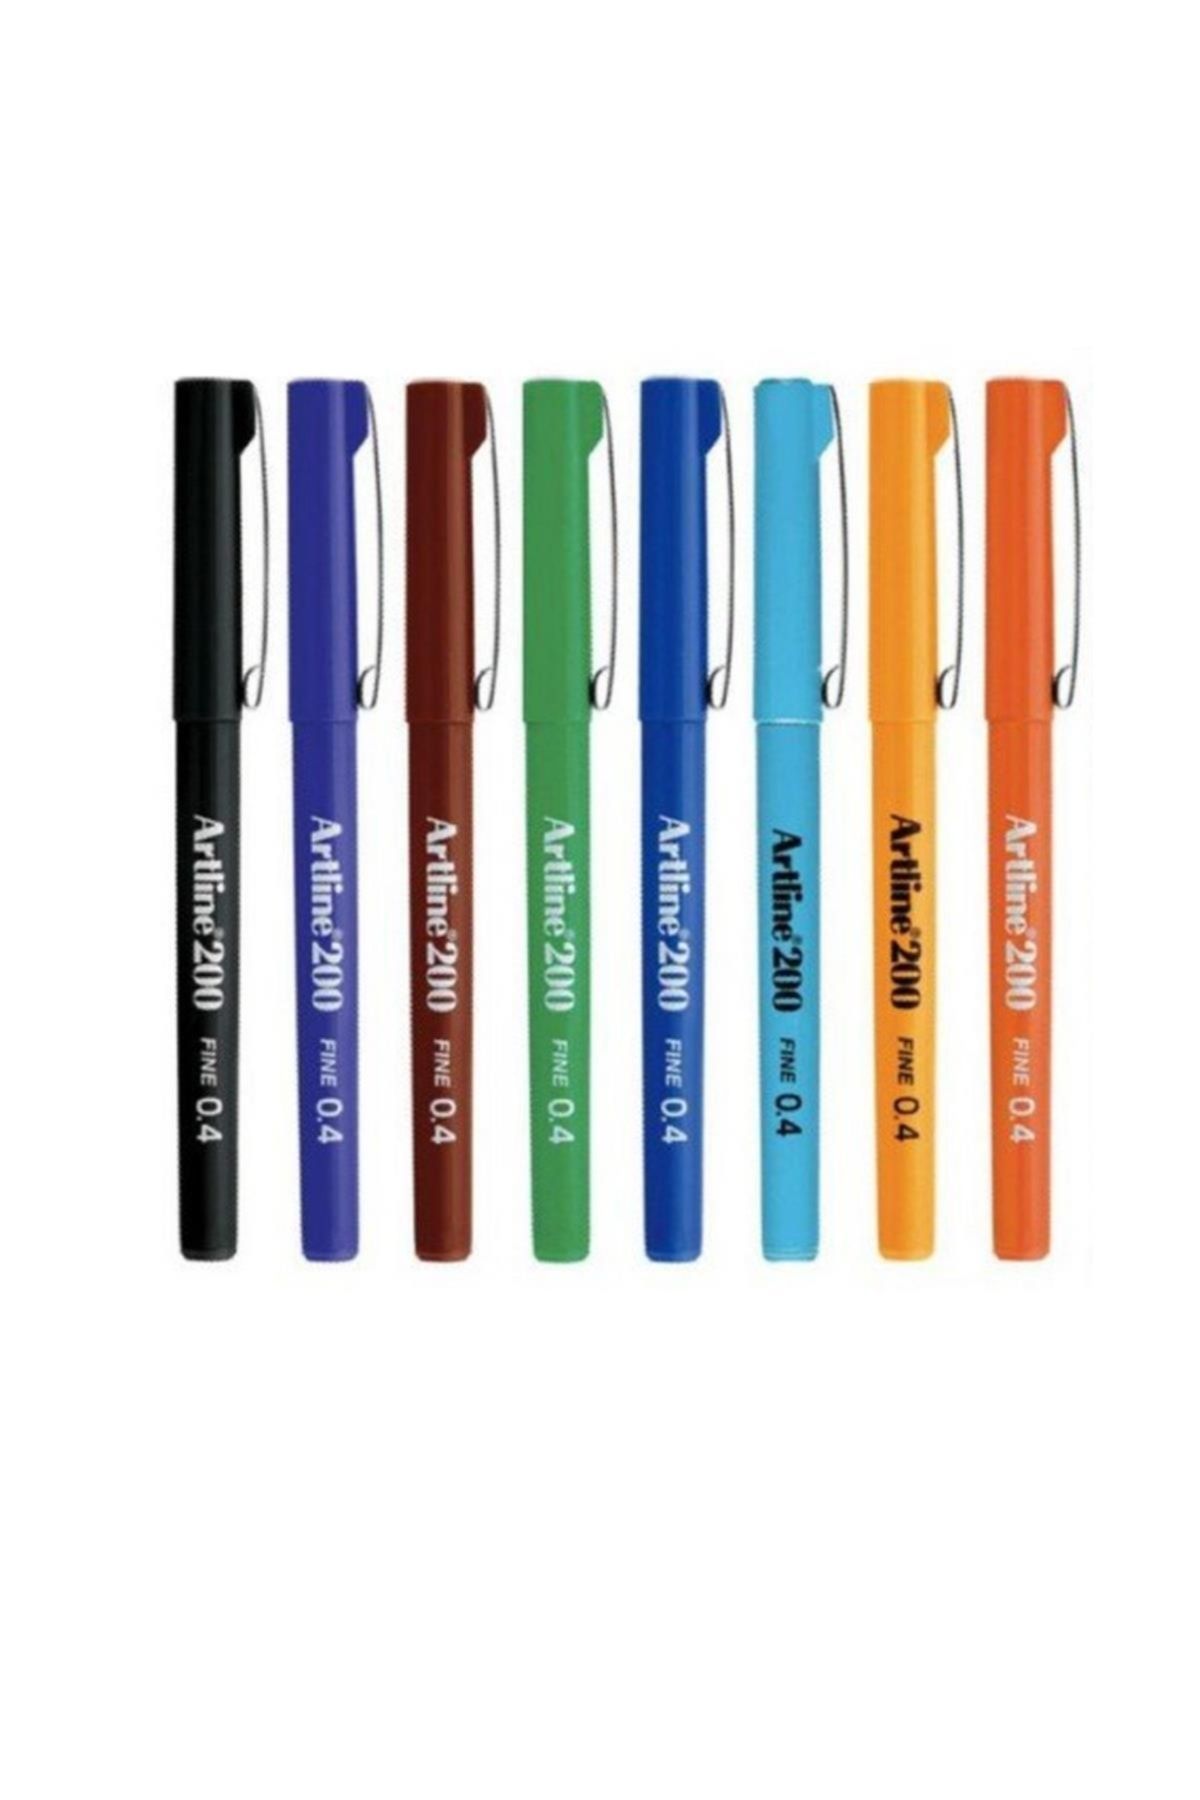 artline 200 Fineliner 0.4 Mm Ince Uçlu Yazı Ve Çizim Kalemi 8 Renk (8 Adet Kalem)